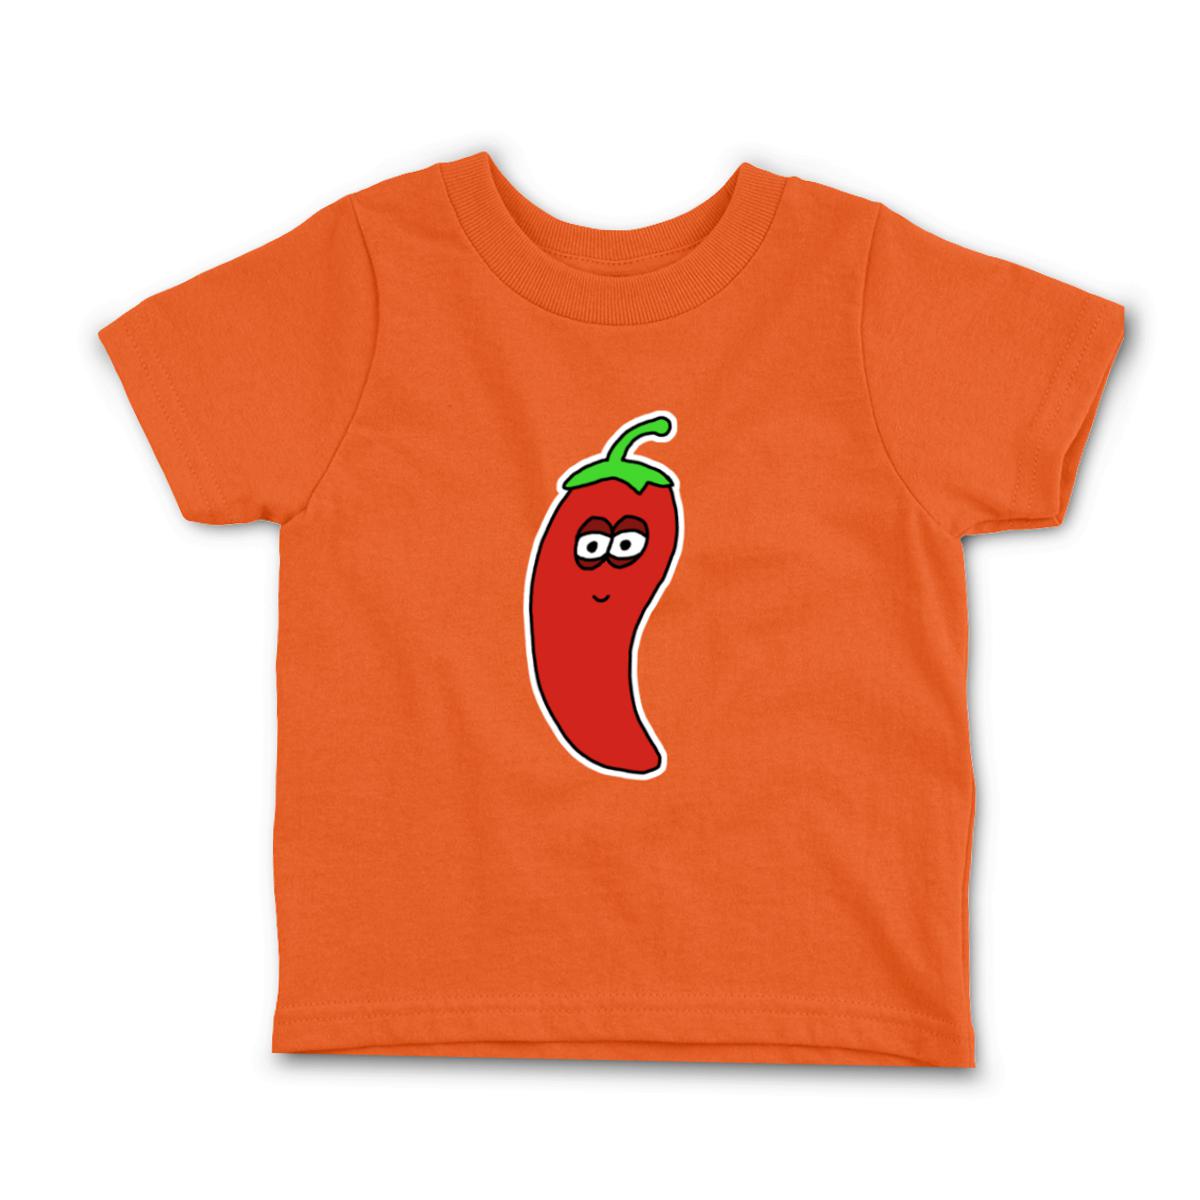 Chili Pepper Infant Tee 12M orange